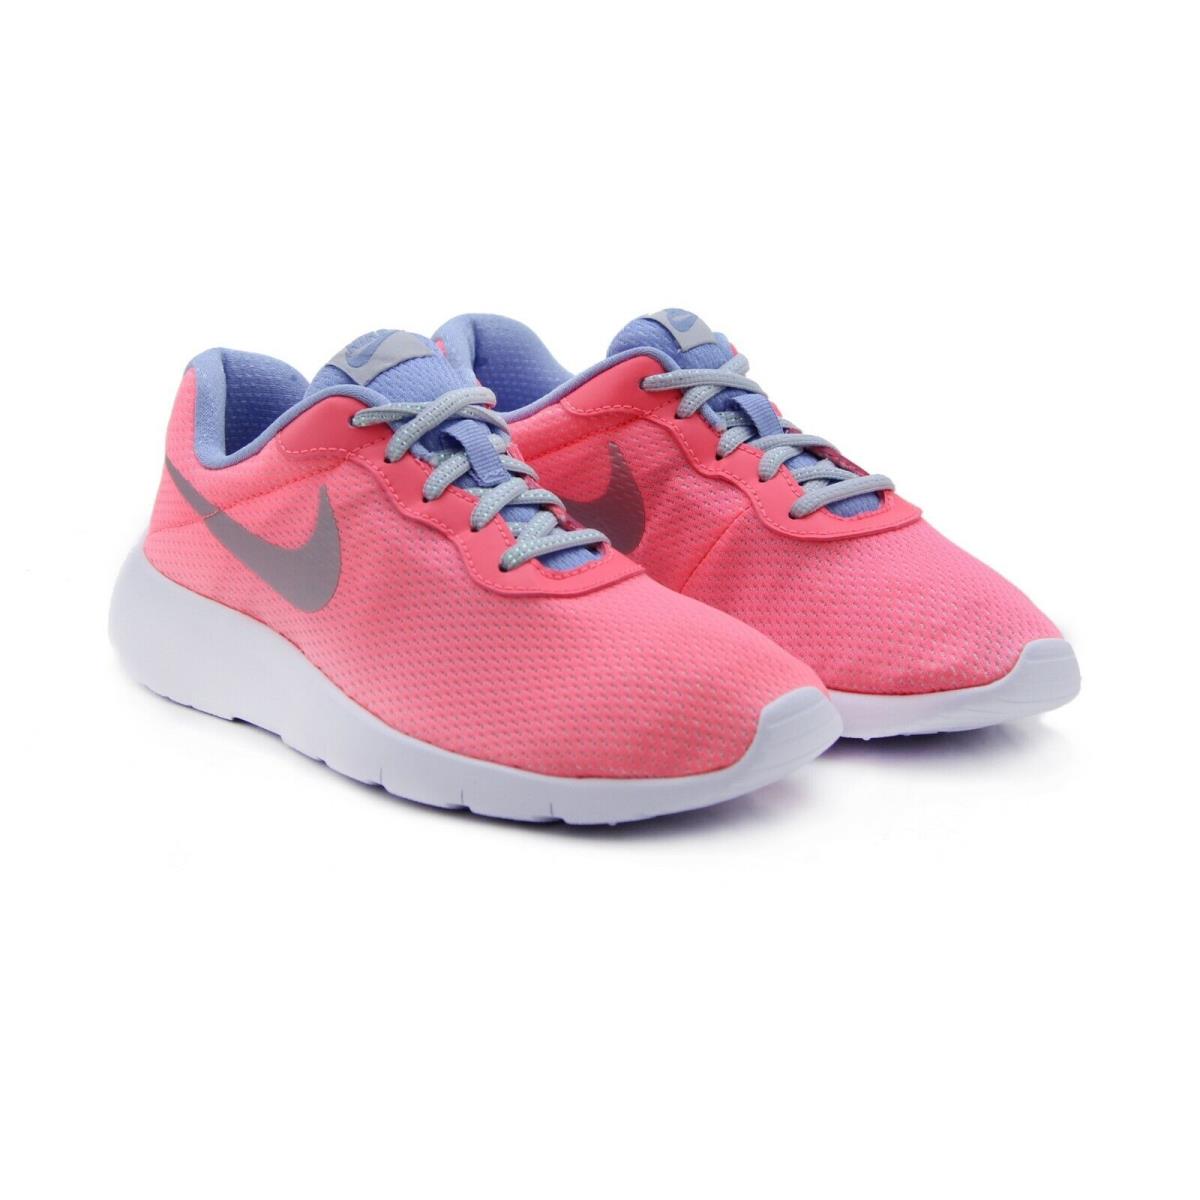 Nike Youth Tanjun SE GS Running Shoes 859617-600 GS Size 4 7